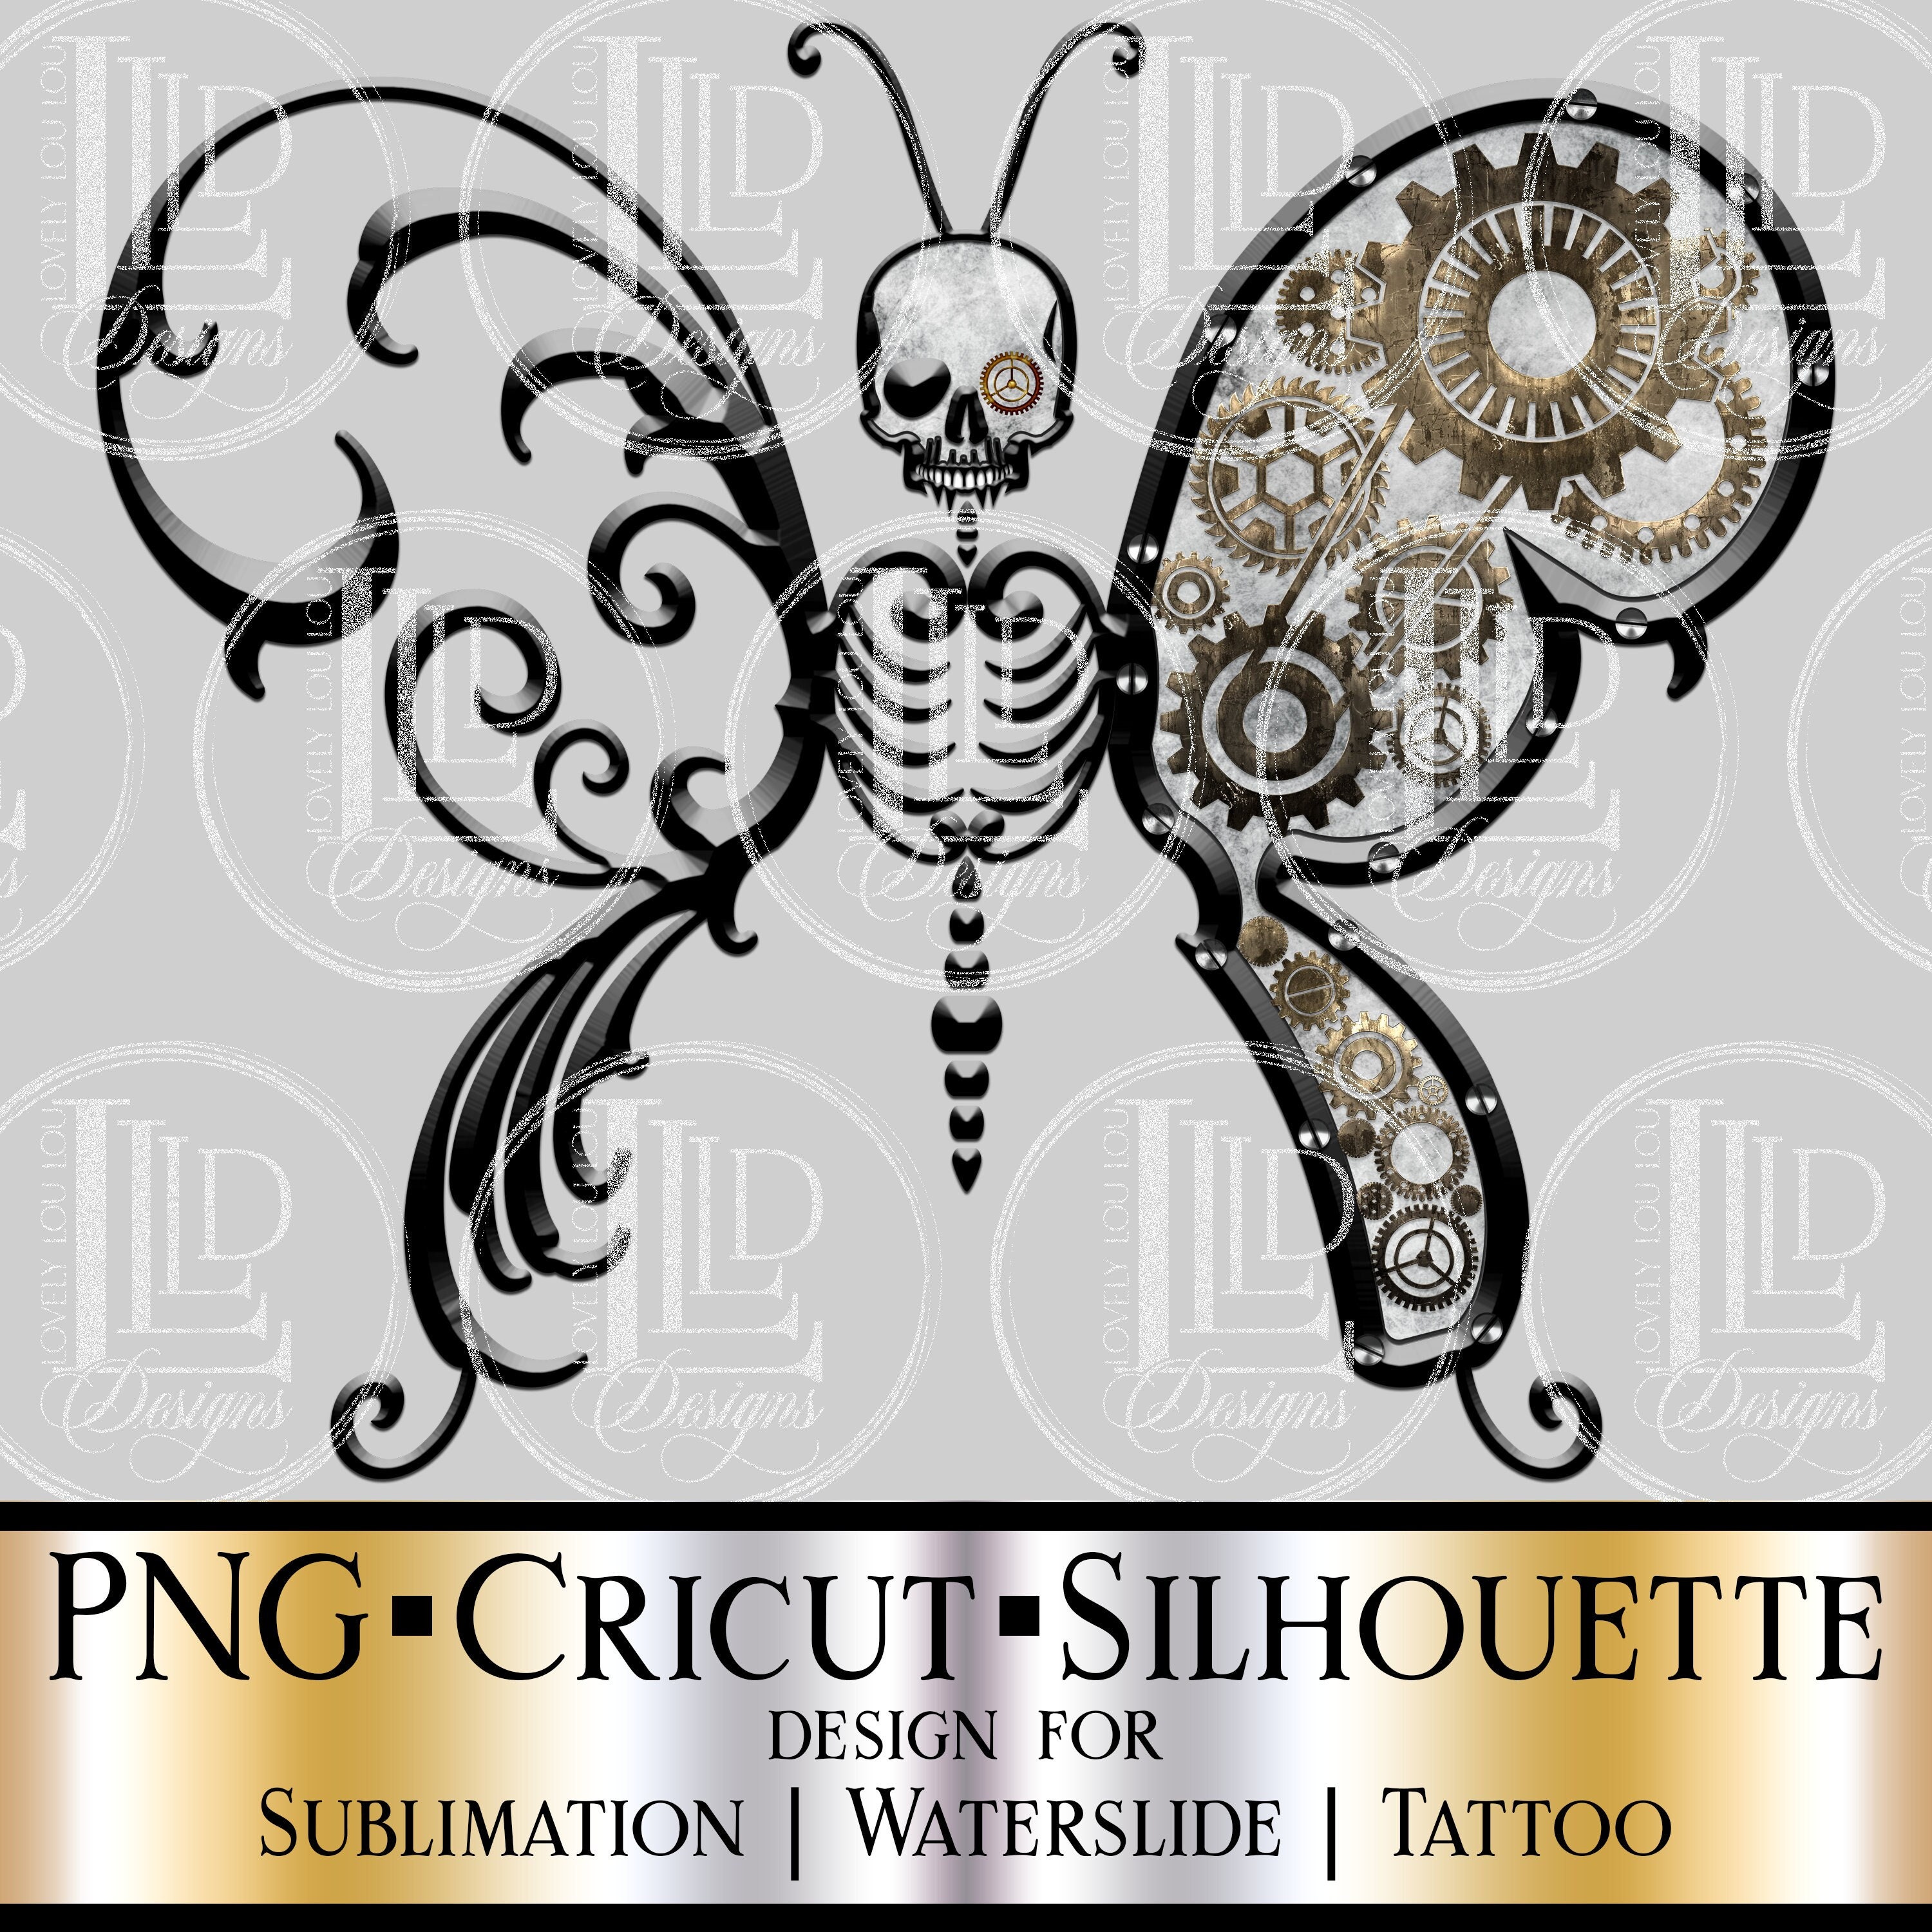 49 Butterfly tattoo Ideas Best Designs  Canadian Tattoos